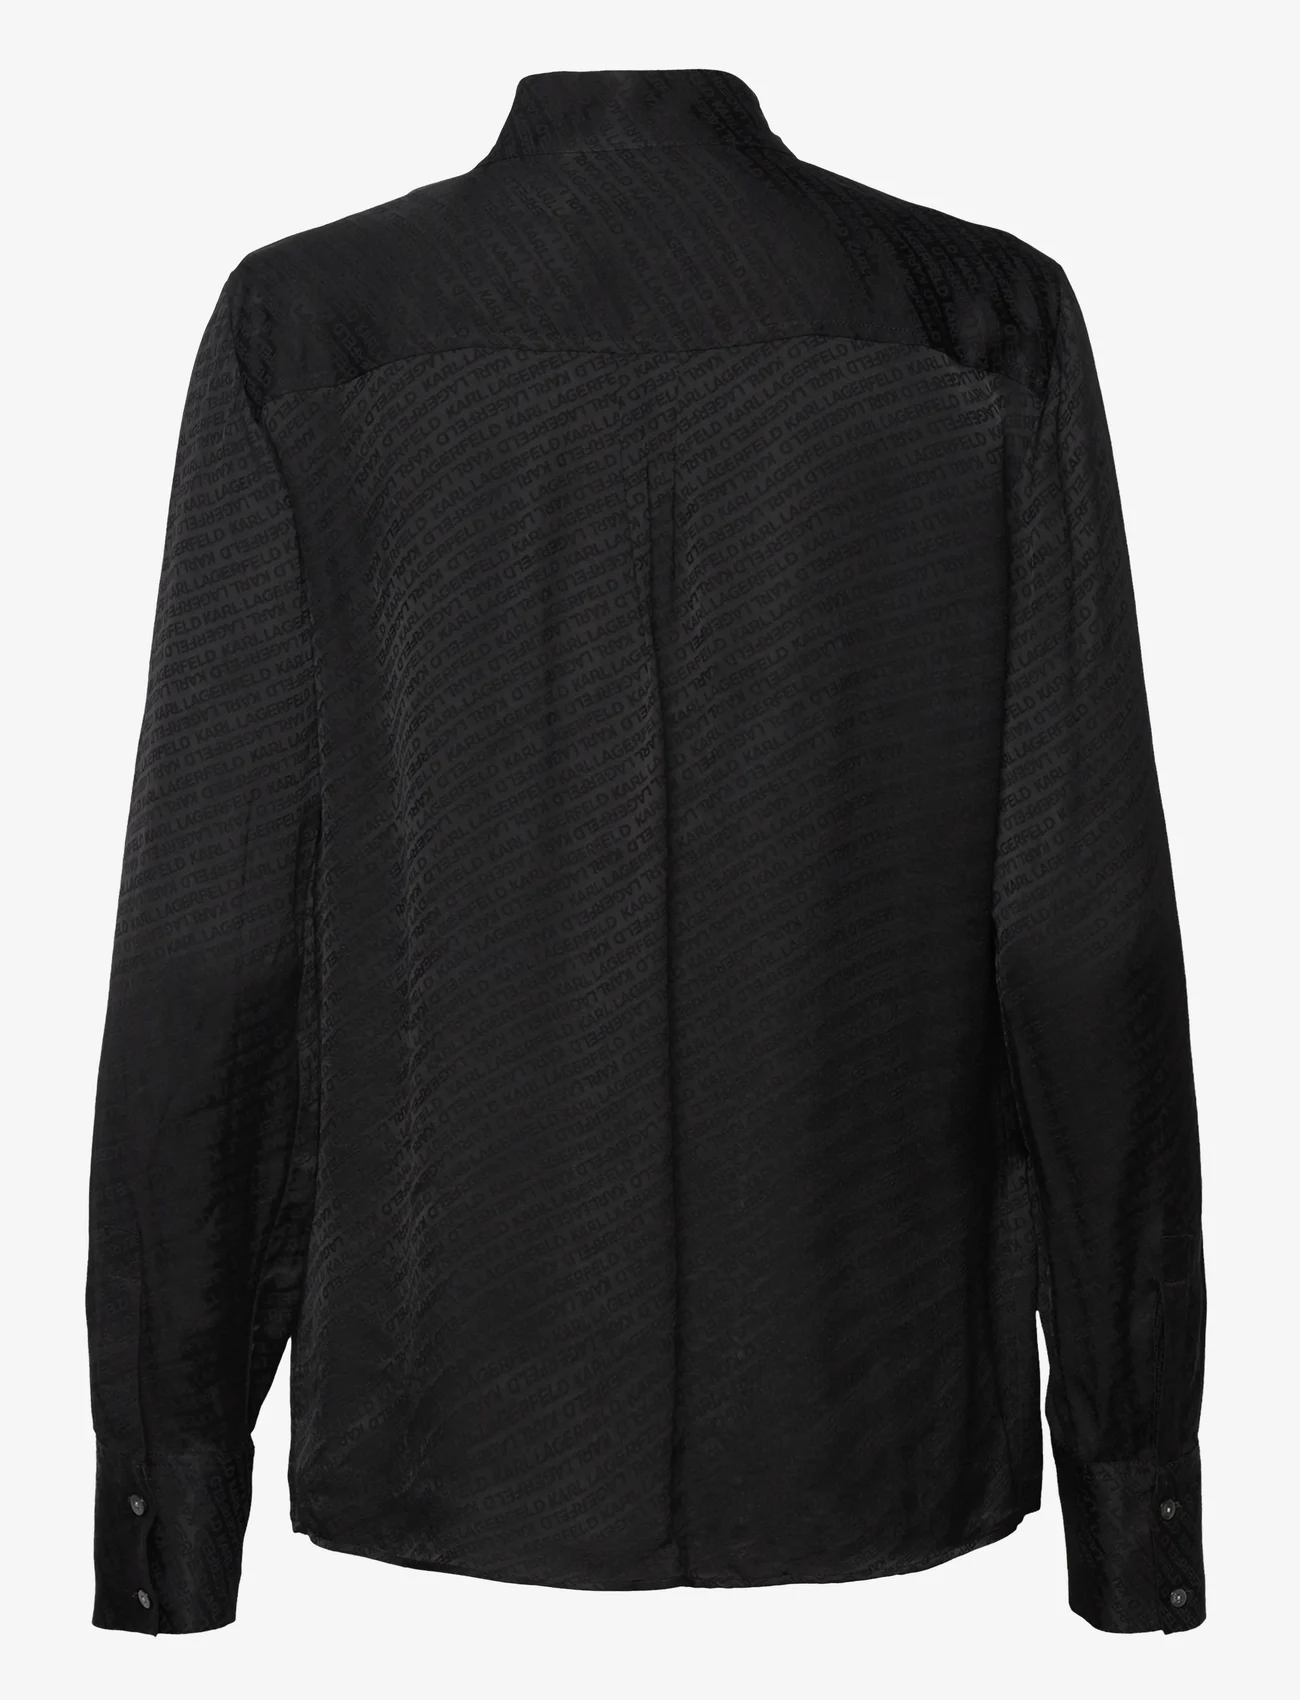 Karl Lagerfeld - Logo Jacquard Ruffle Shirt - langermede bluser - black - 1